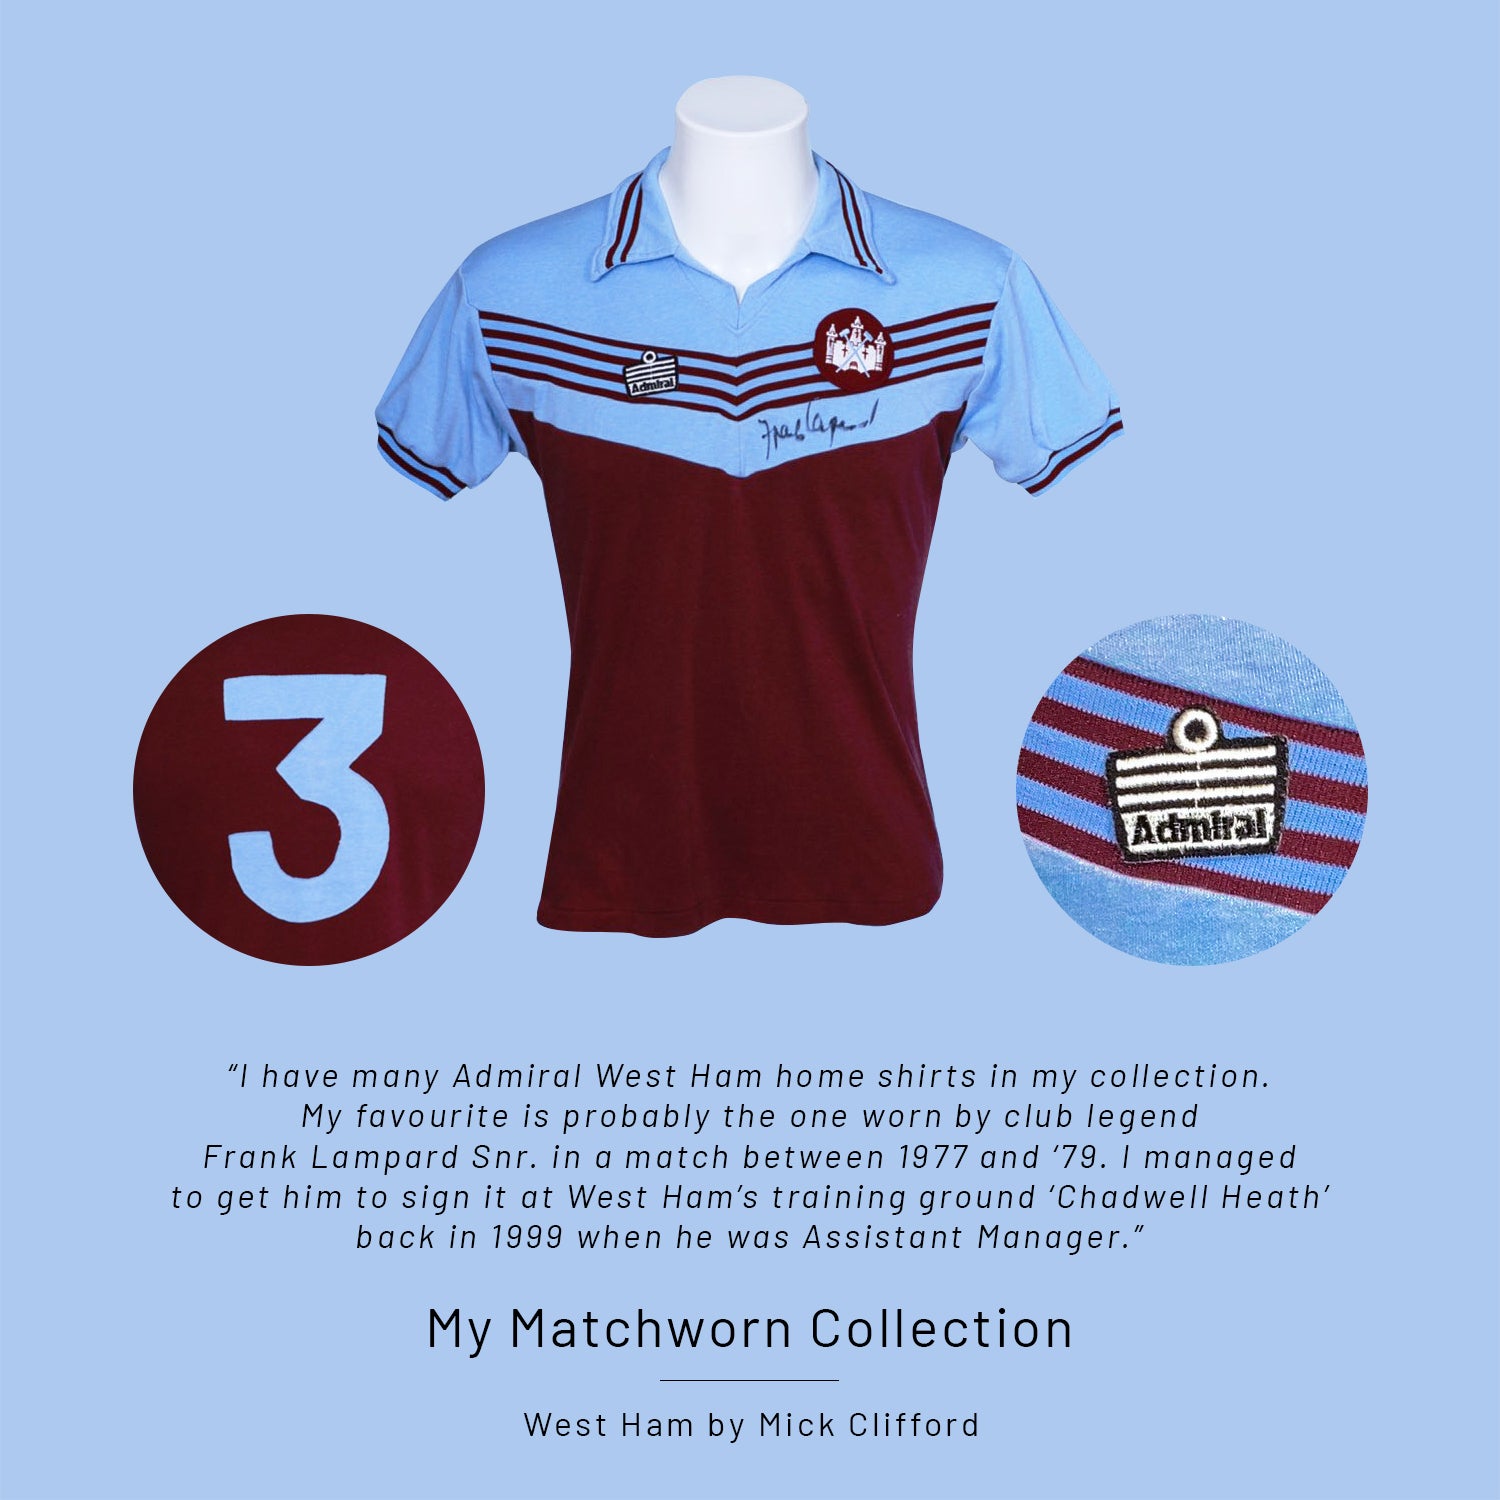 Frank Lampard - West Ham Matchworn 1977-79 Home Kit